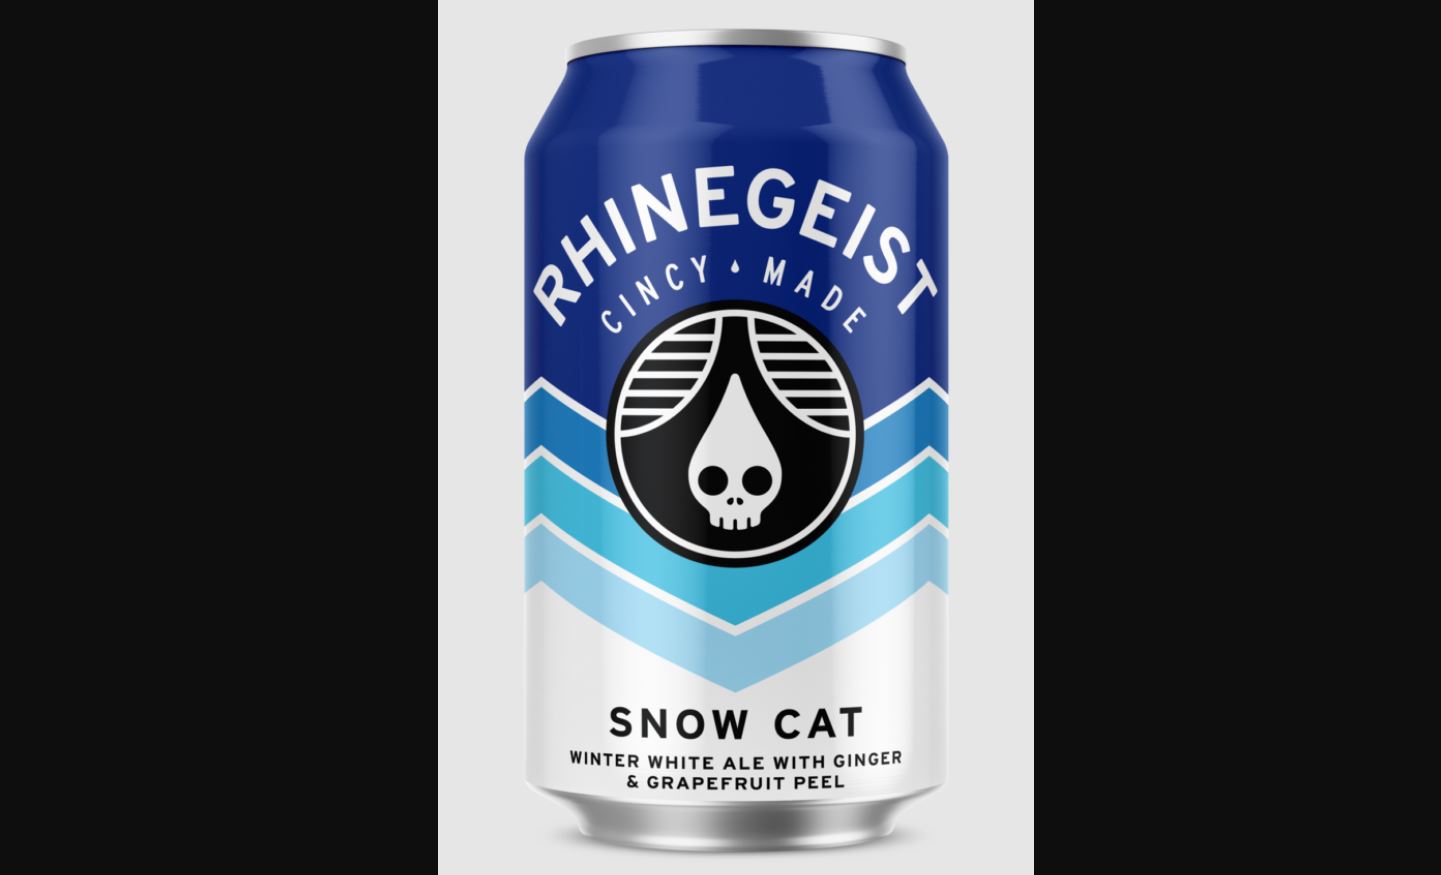 Rhinegeist Snowcat